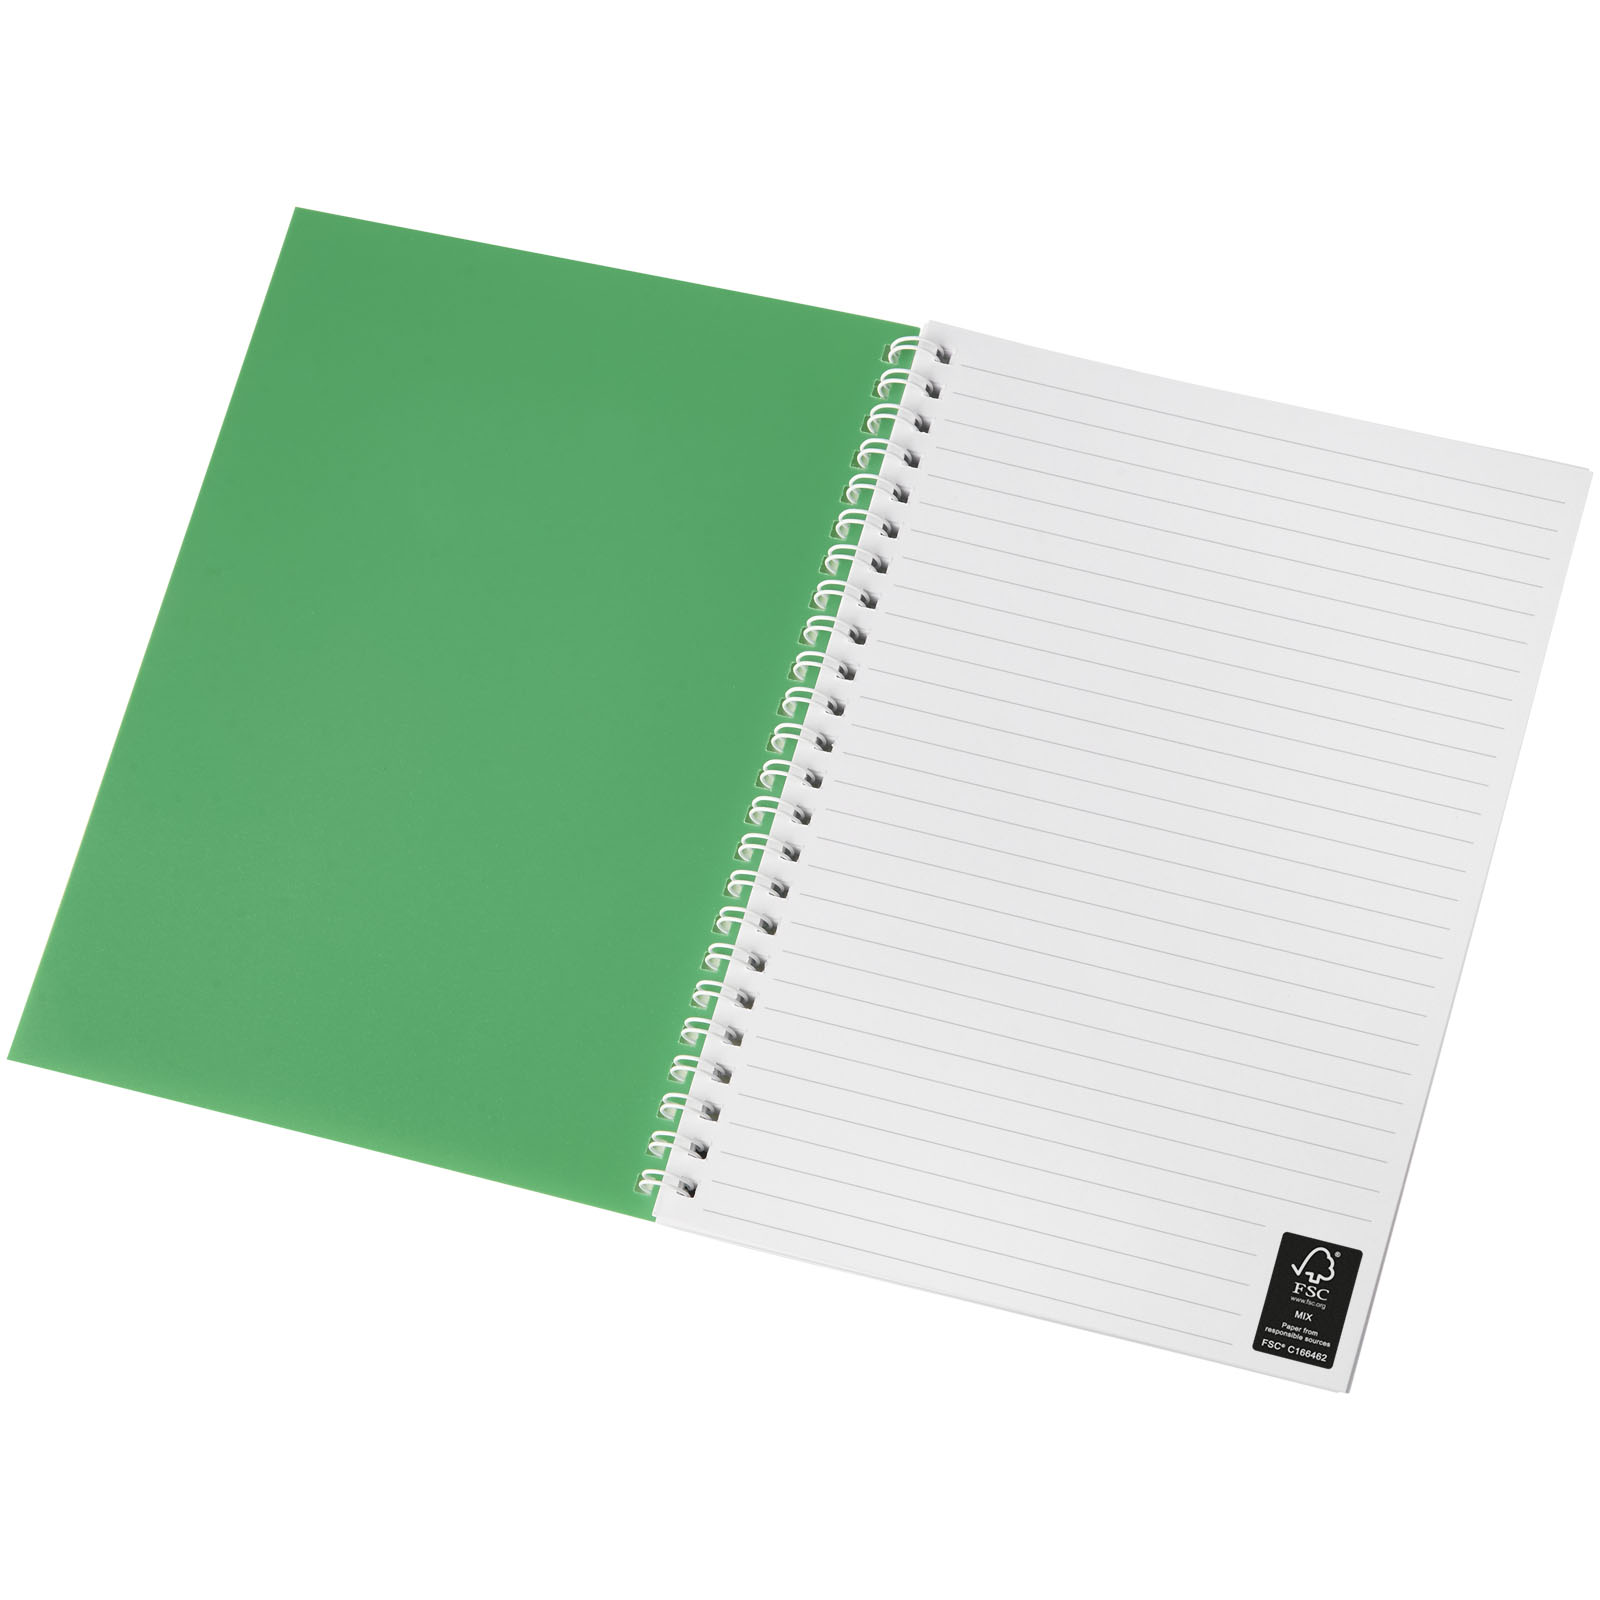 Advertising Notebooks - Rothko A5 notebook - 3